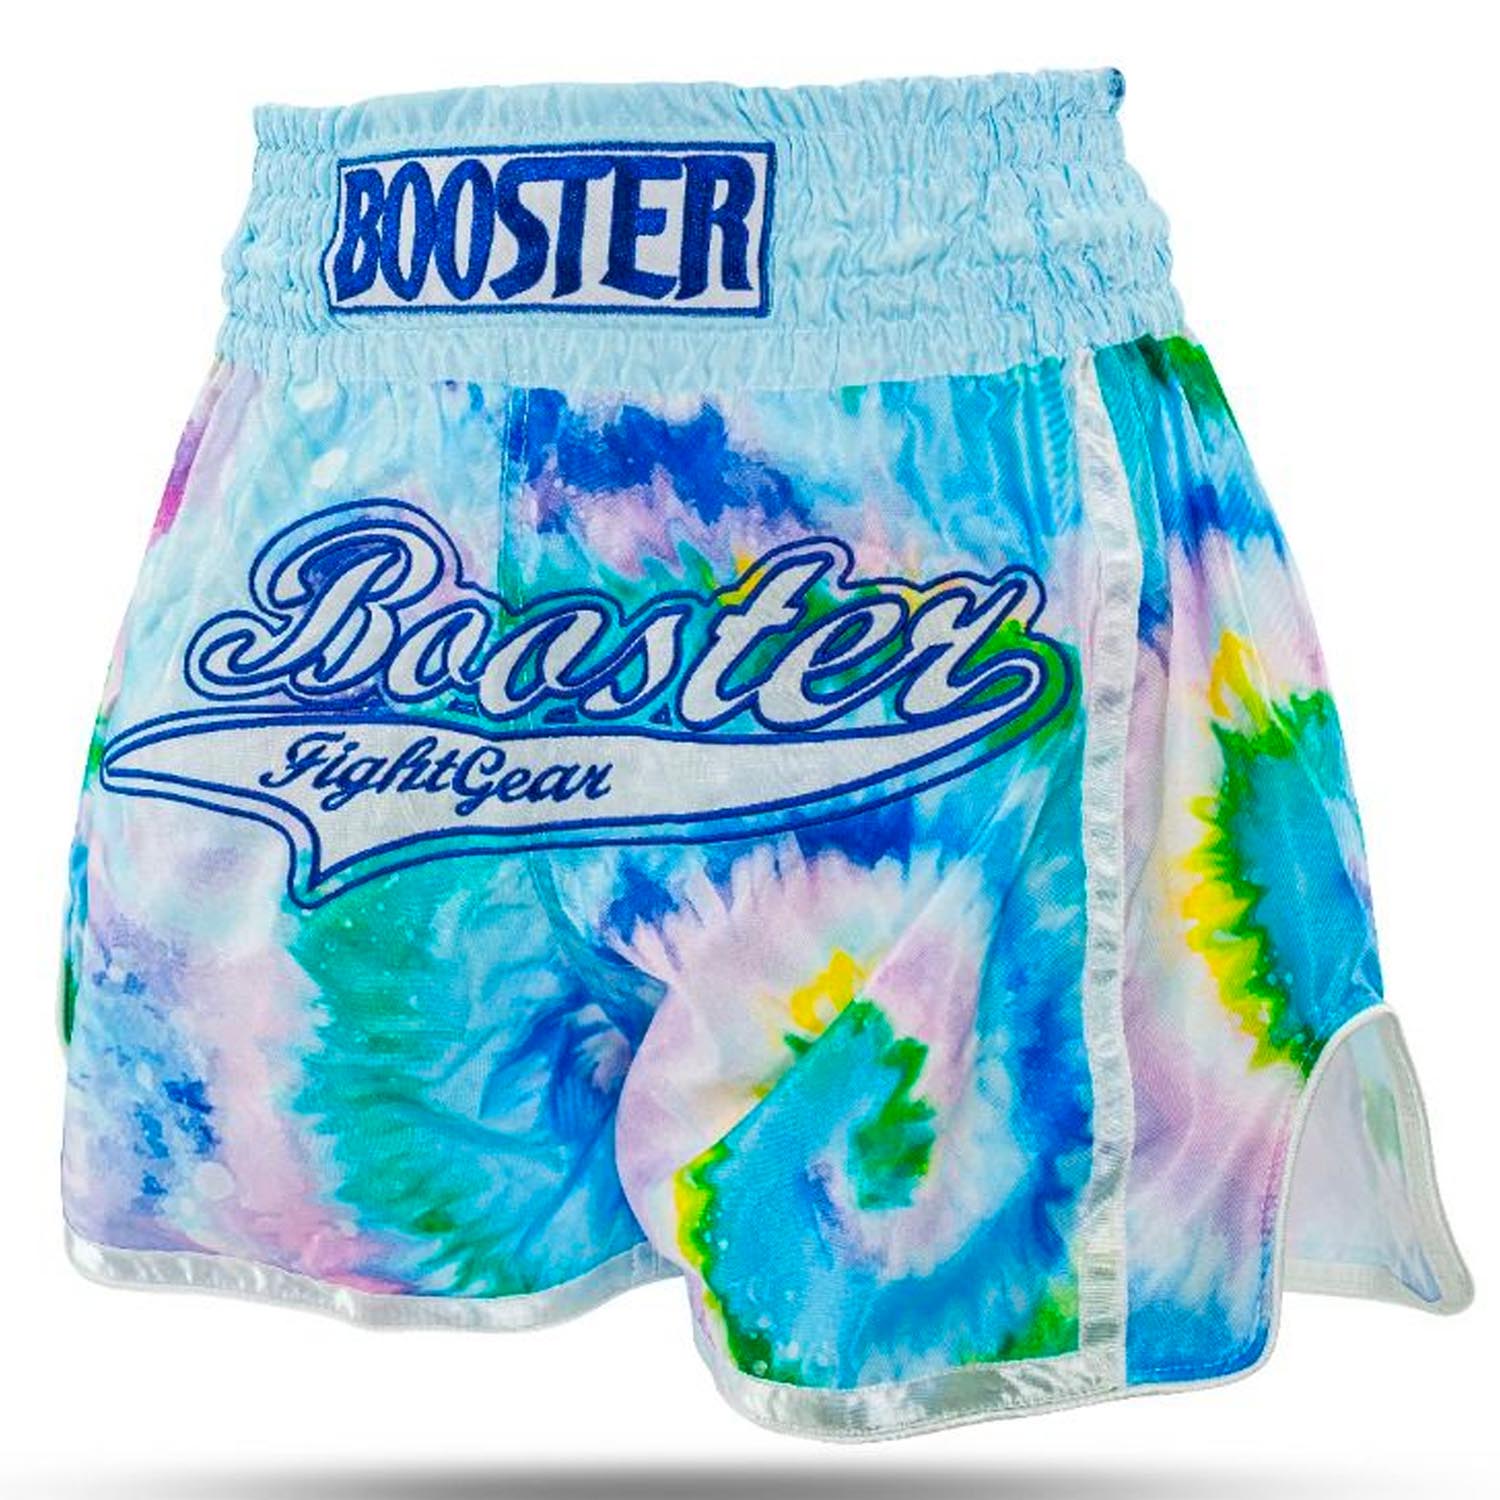 Booster Muay Thai Shorts, Swirl, blau, S